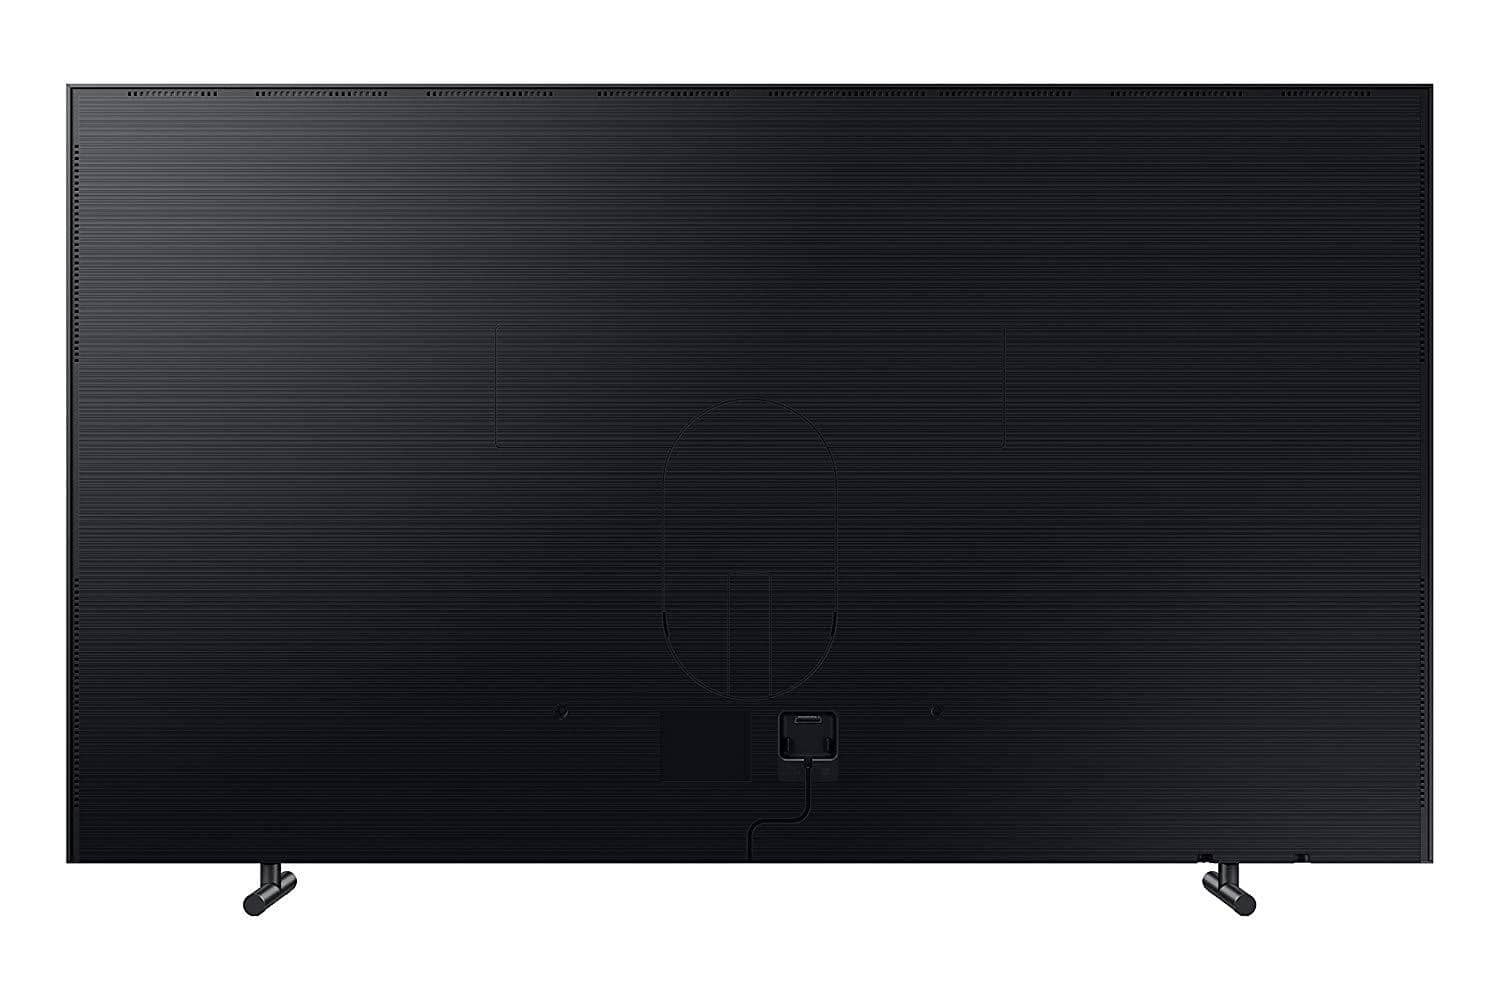 Samsung UN43LS03NAFXZA Flat 43” LED 4K UHD The Frame Smart TV 2018